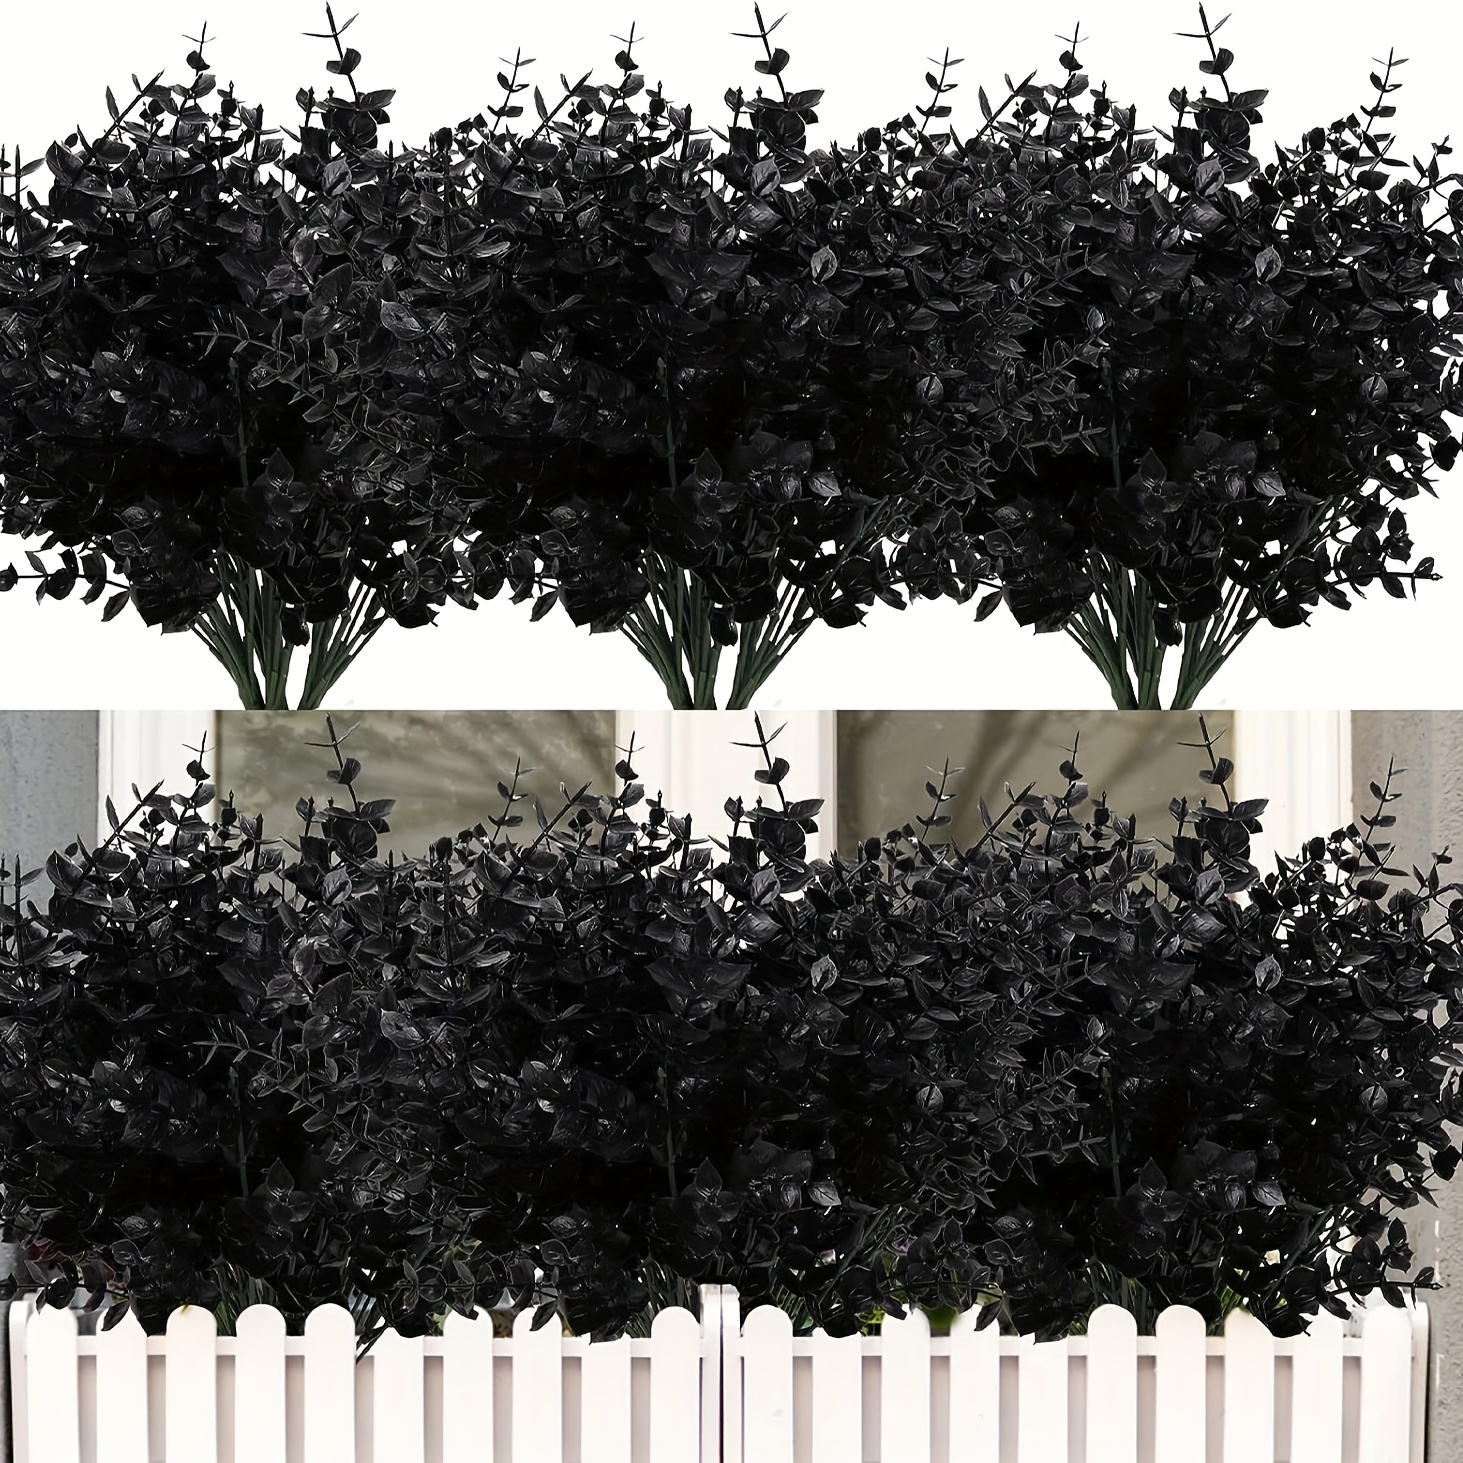 

4pcs Black Artificial Flowers, Fake Outdoor Uv Resistant Plants Indoor Outside Hanging Planter Flower Decoration, Garden Decor, Farmhouse Decor, Halloween Decor